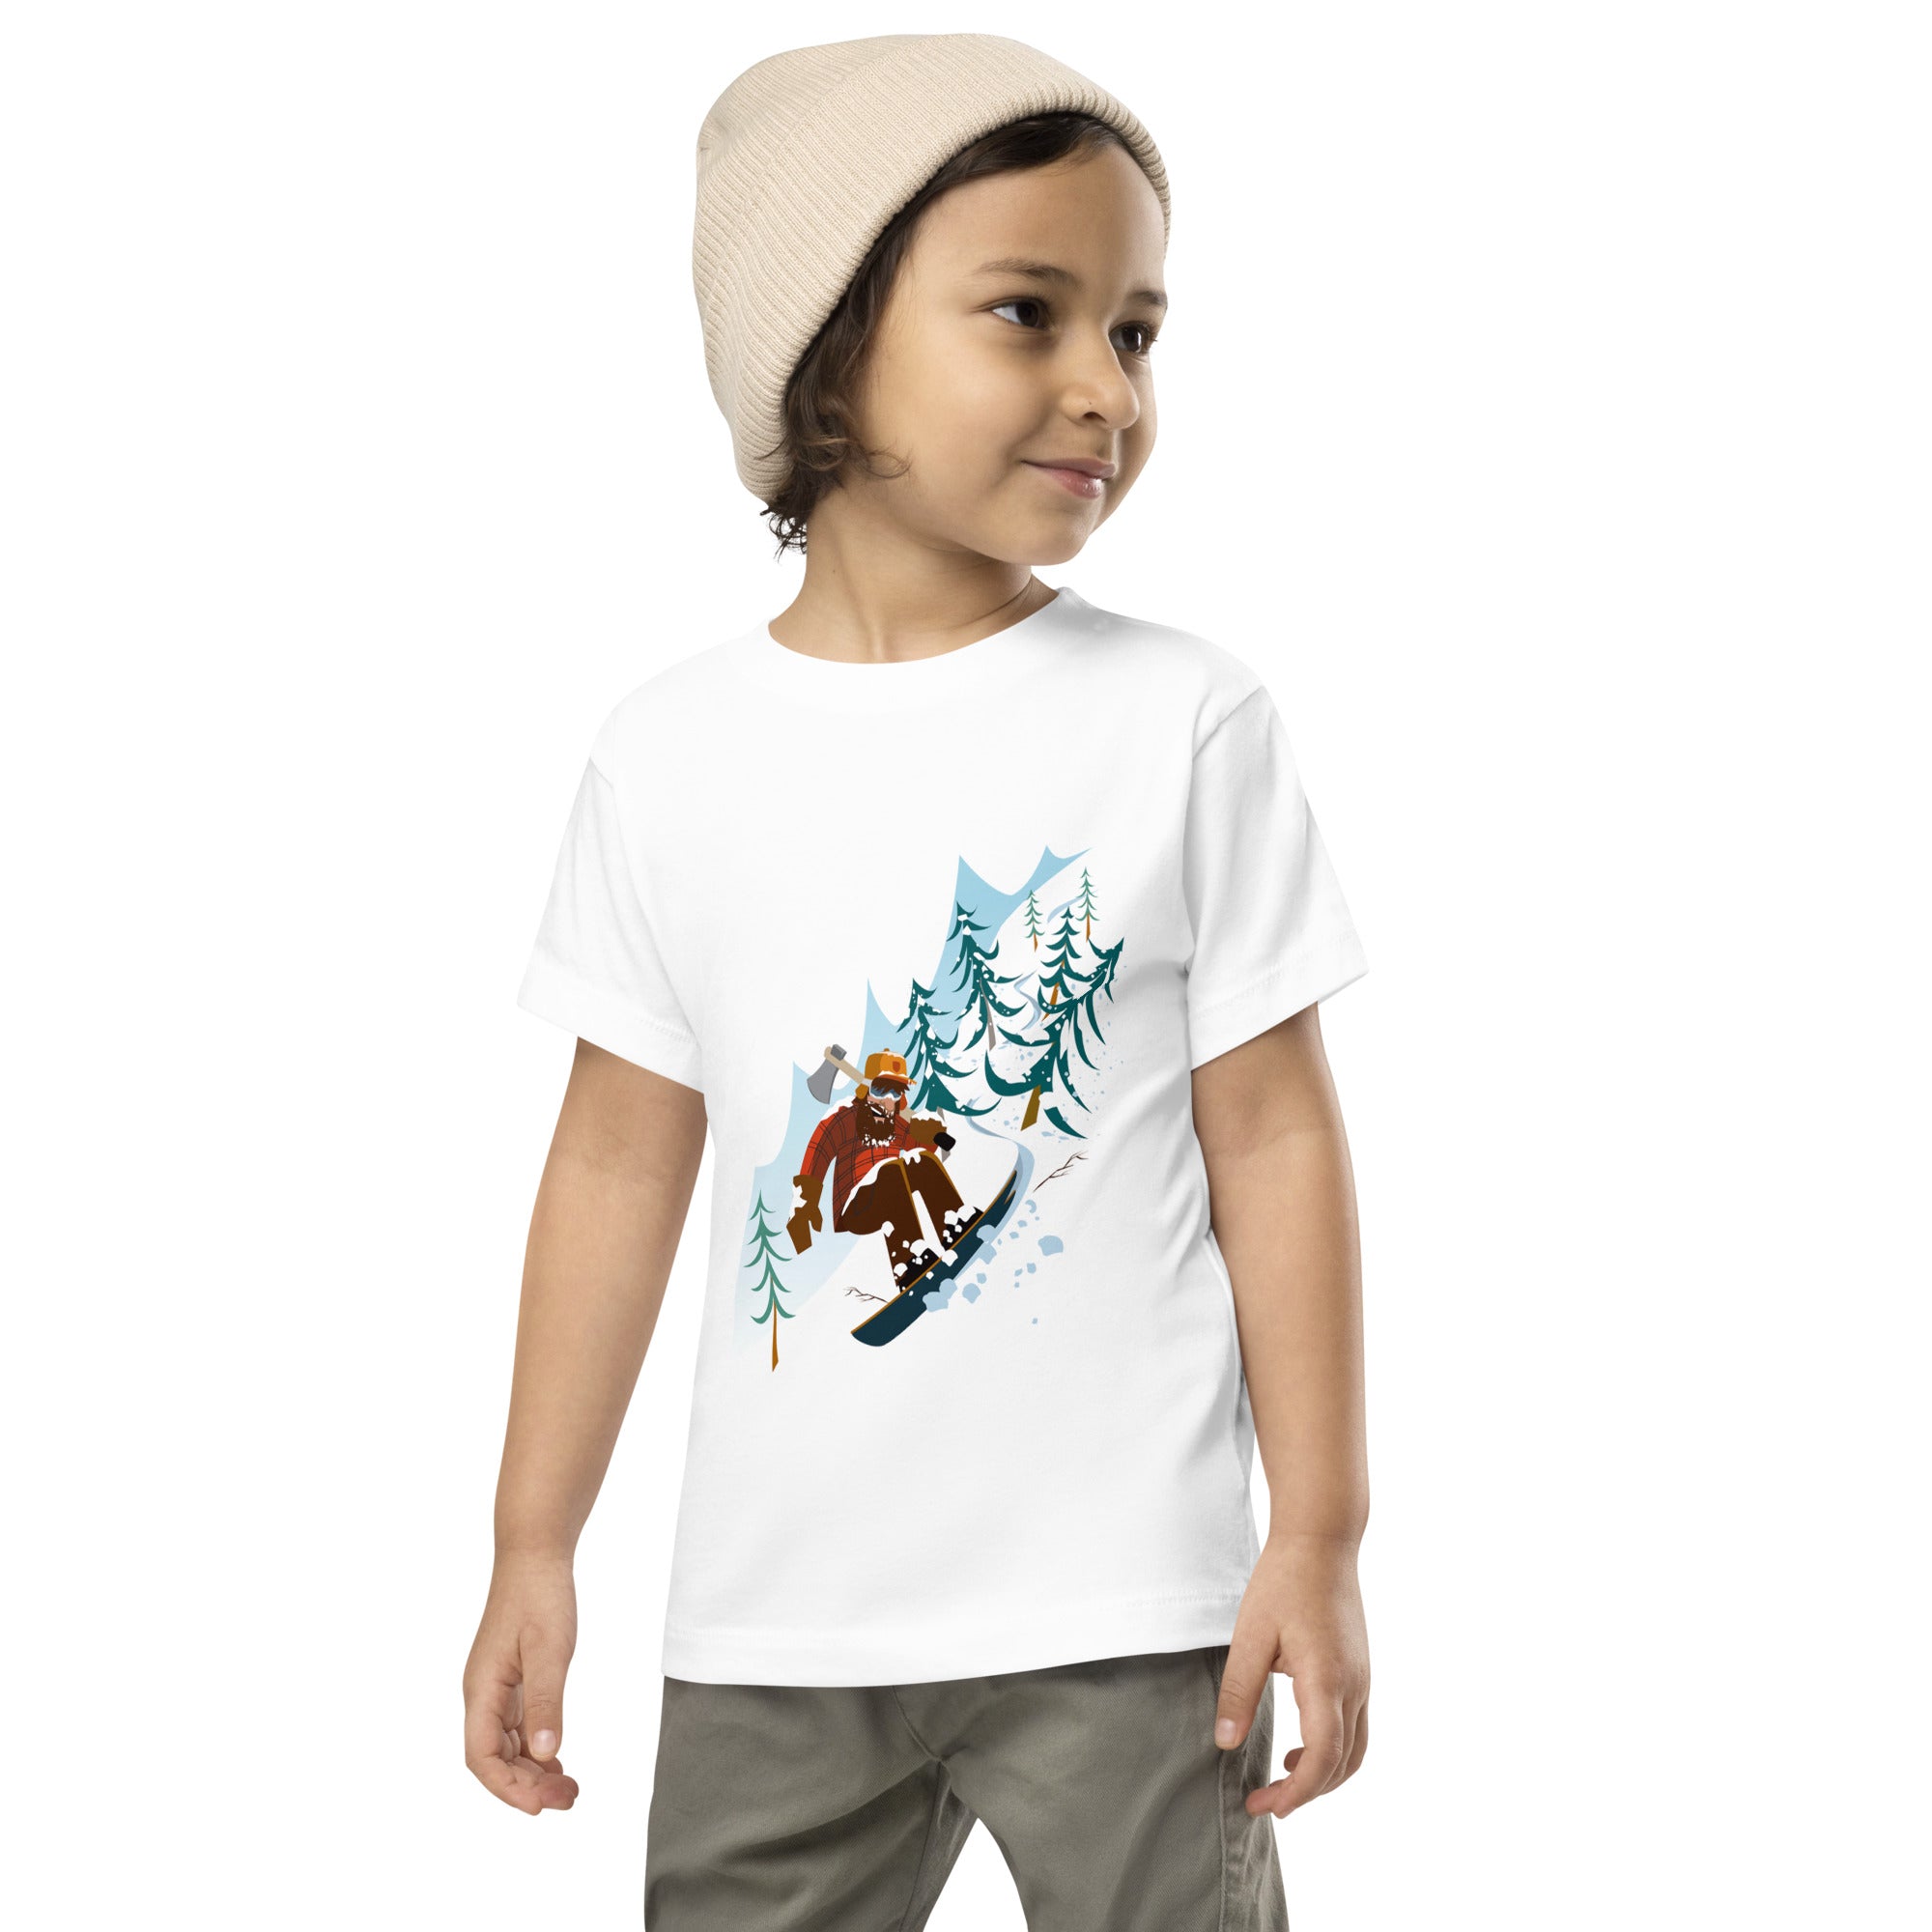 T-shirt pour enfant en bas âge Timberman snowboarder